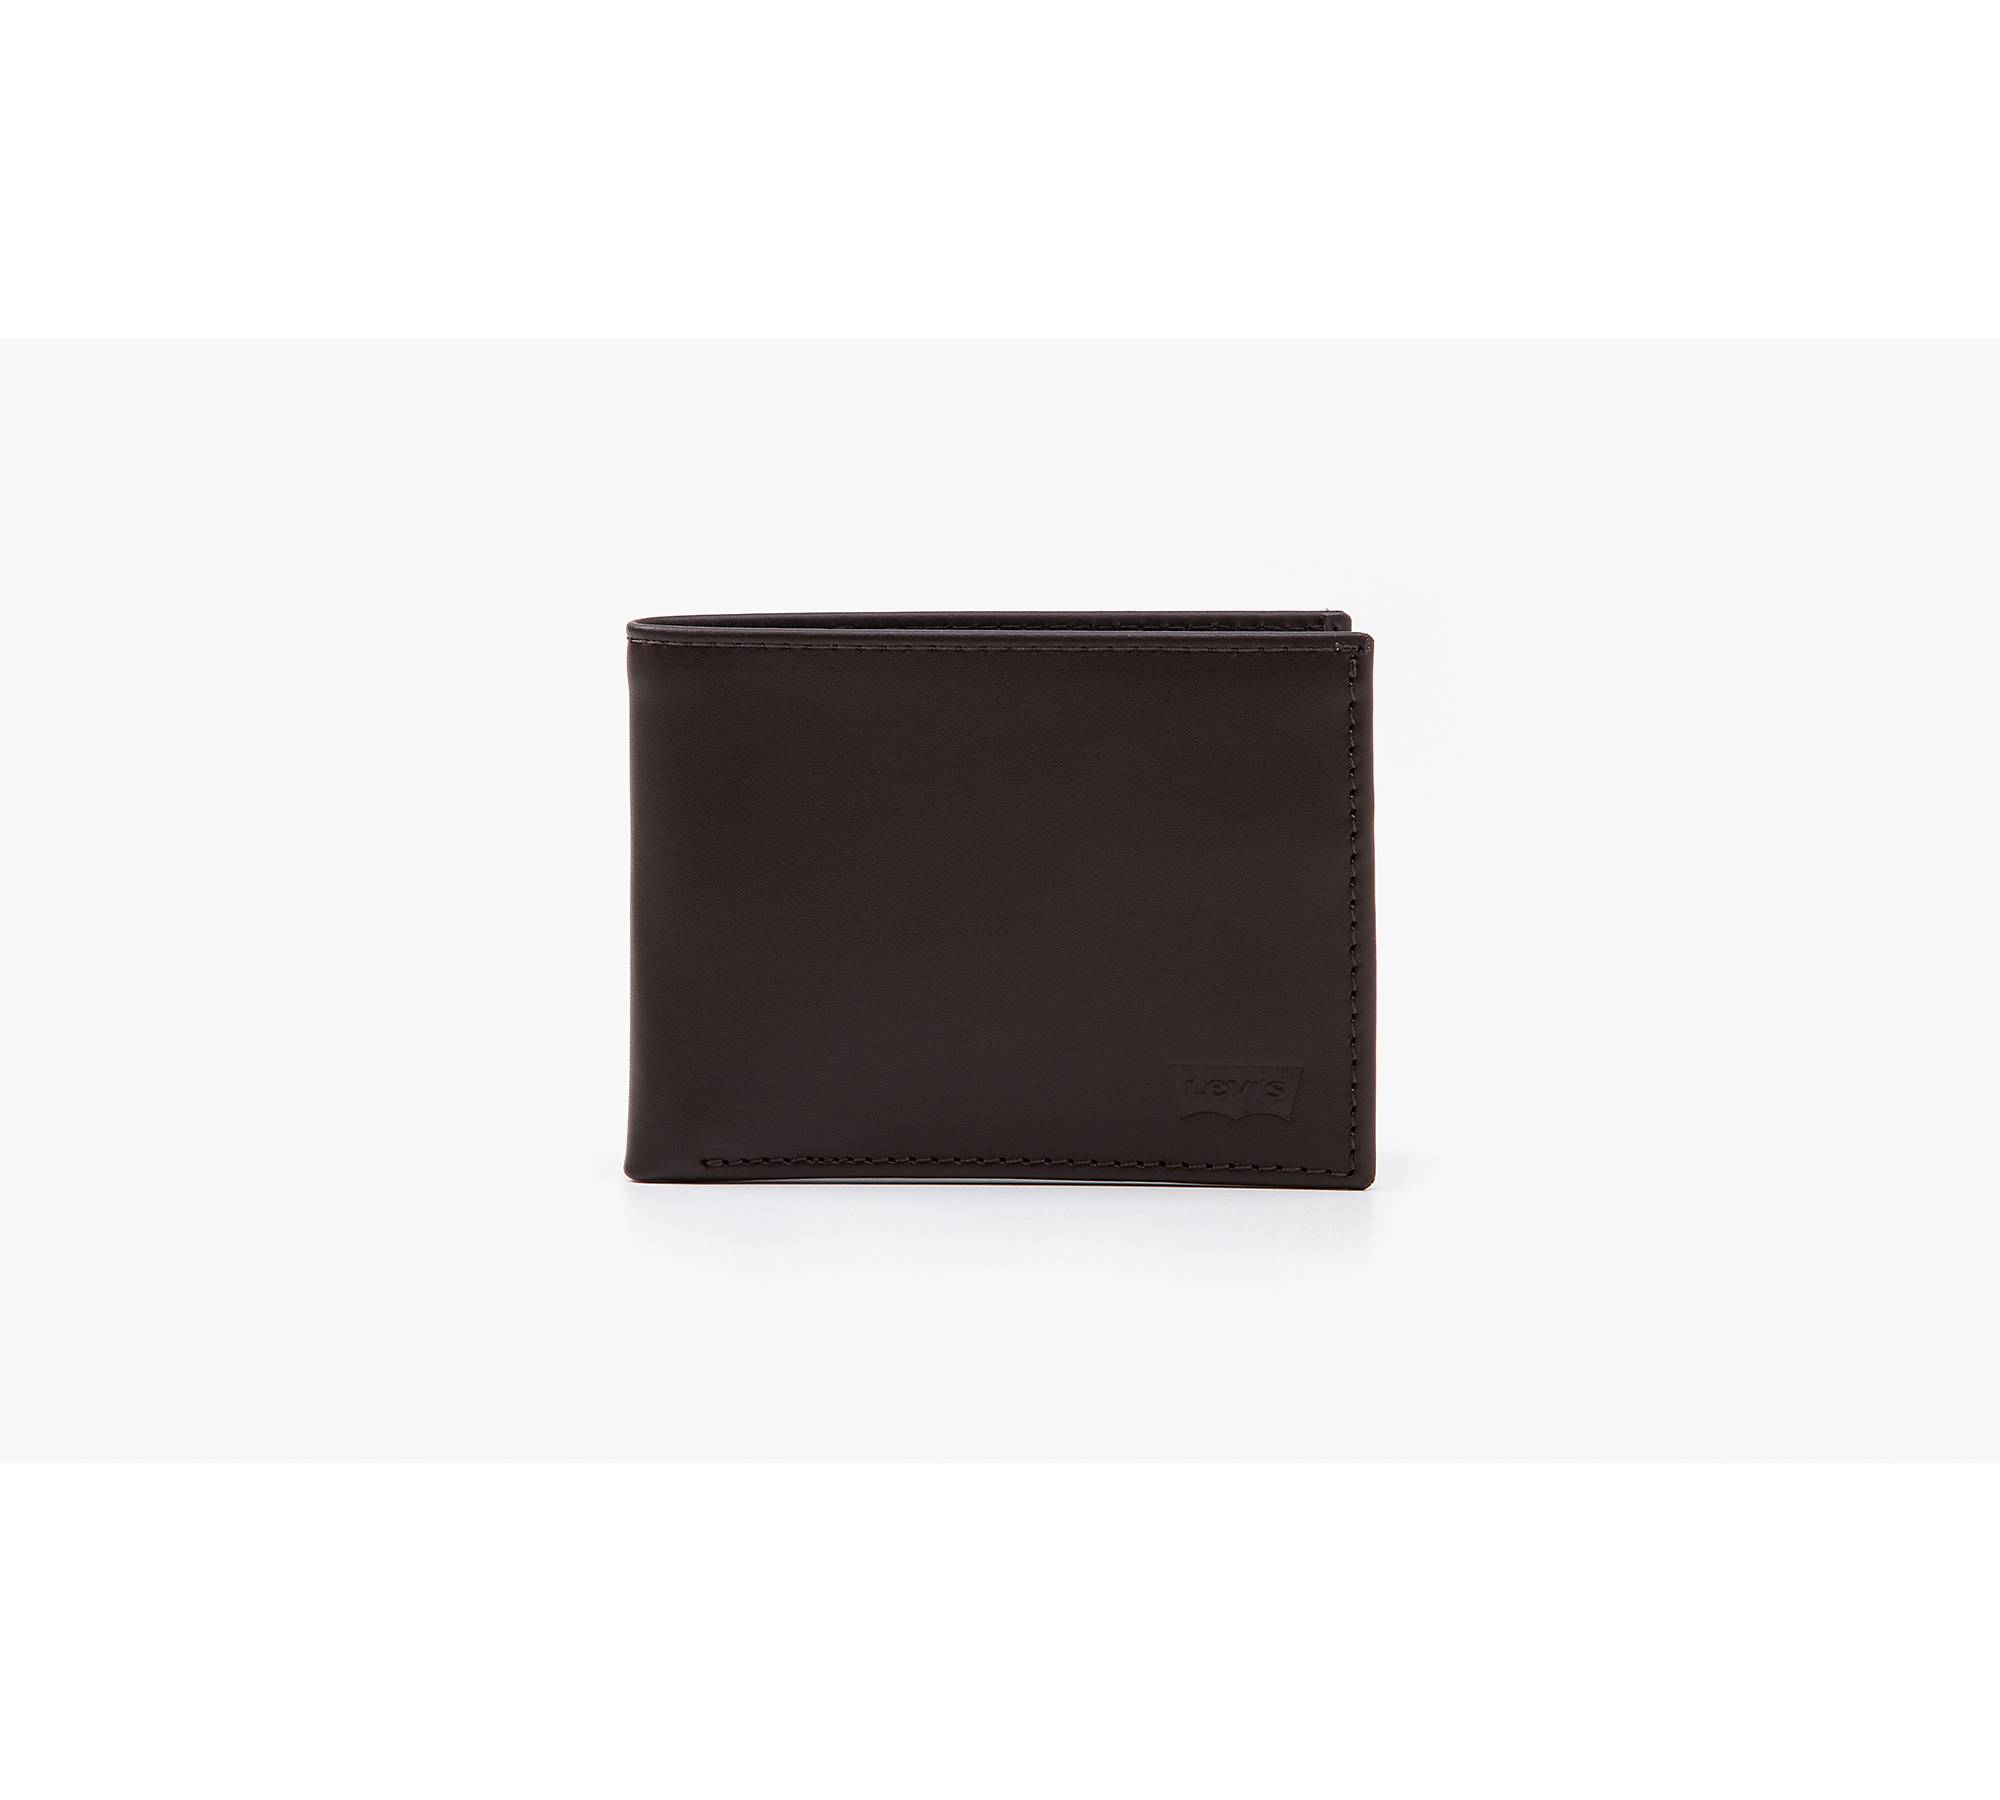  Green Long Bi Fold Leather Wallet For Men And Women, Multiple  Credit/Debit/Gift Card Windows